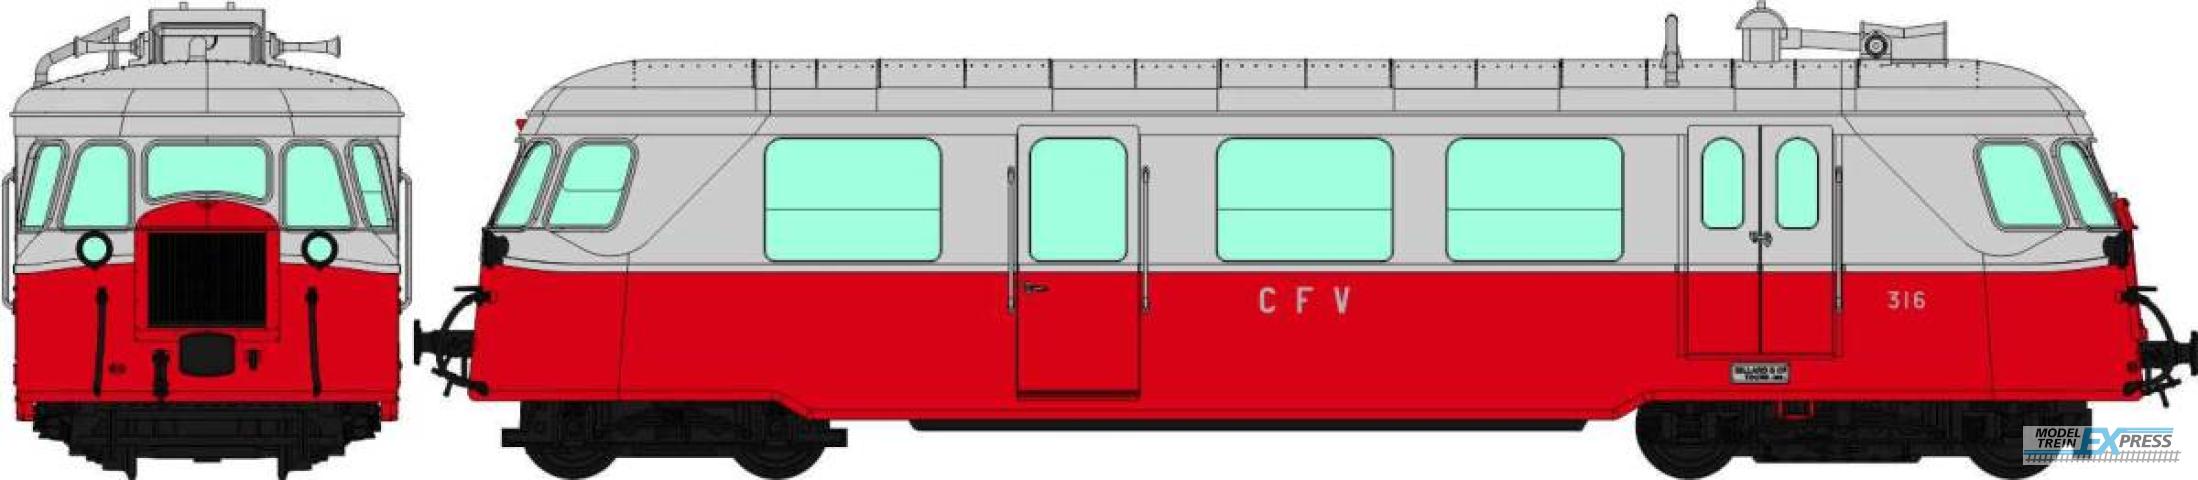 REE models VM-004S BILLARD Railcar CFV N°316, 2 Lights, Red/Grey Era V-VI - DCC Sound